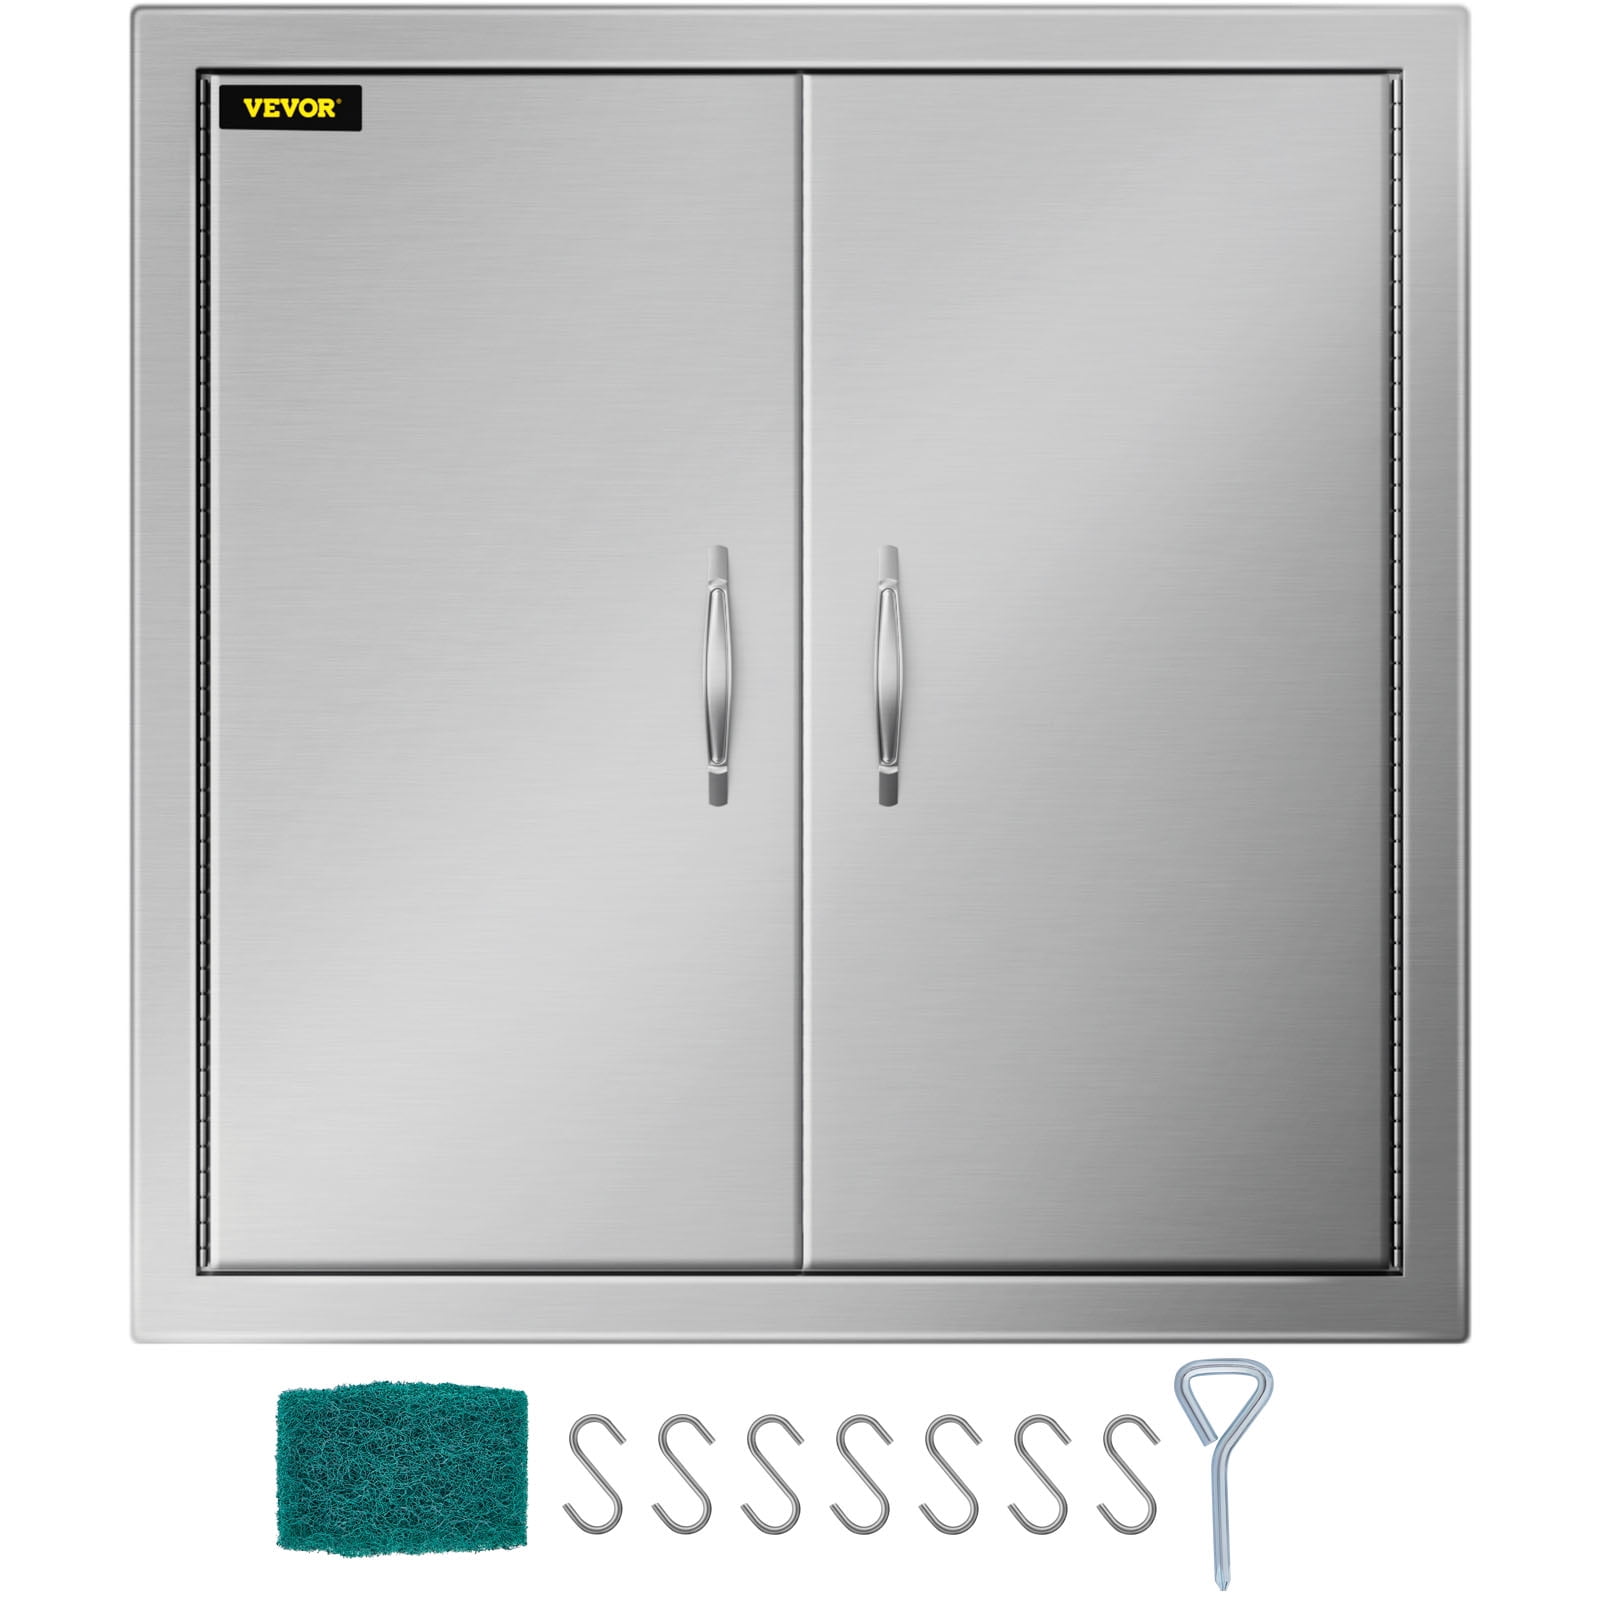 Elegant White - Double Door Base Cabinet | 42W x 34.5H x 24D